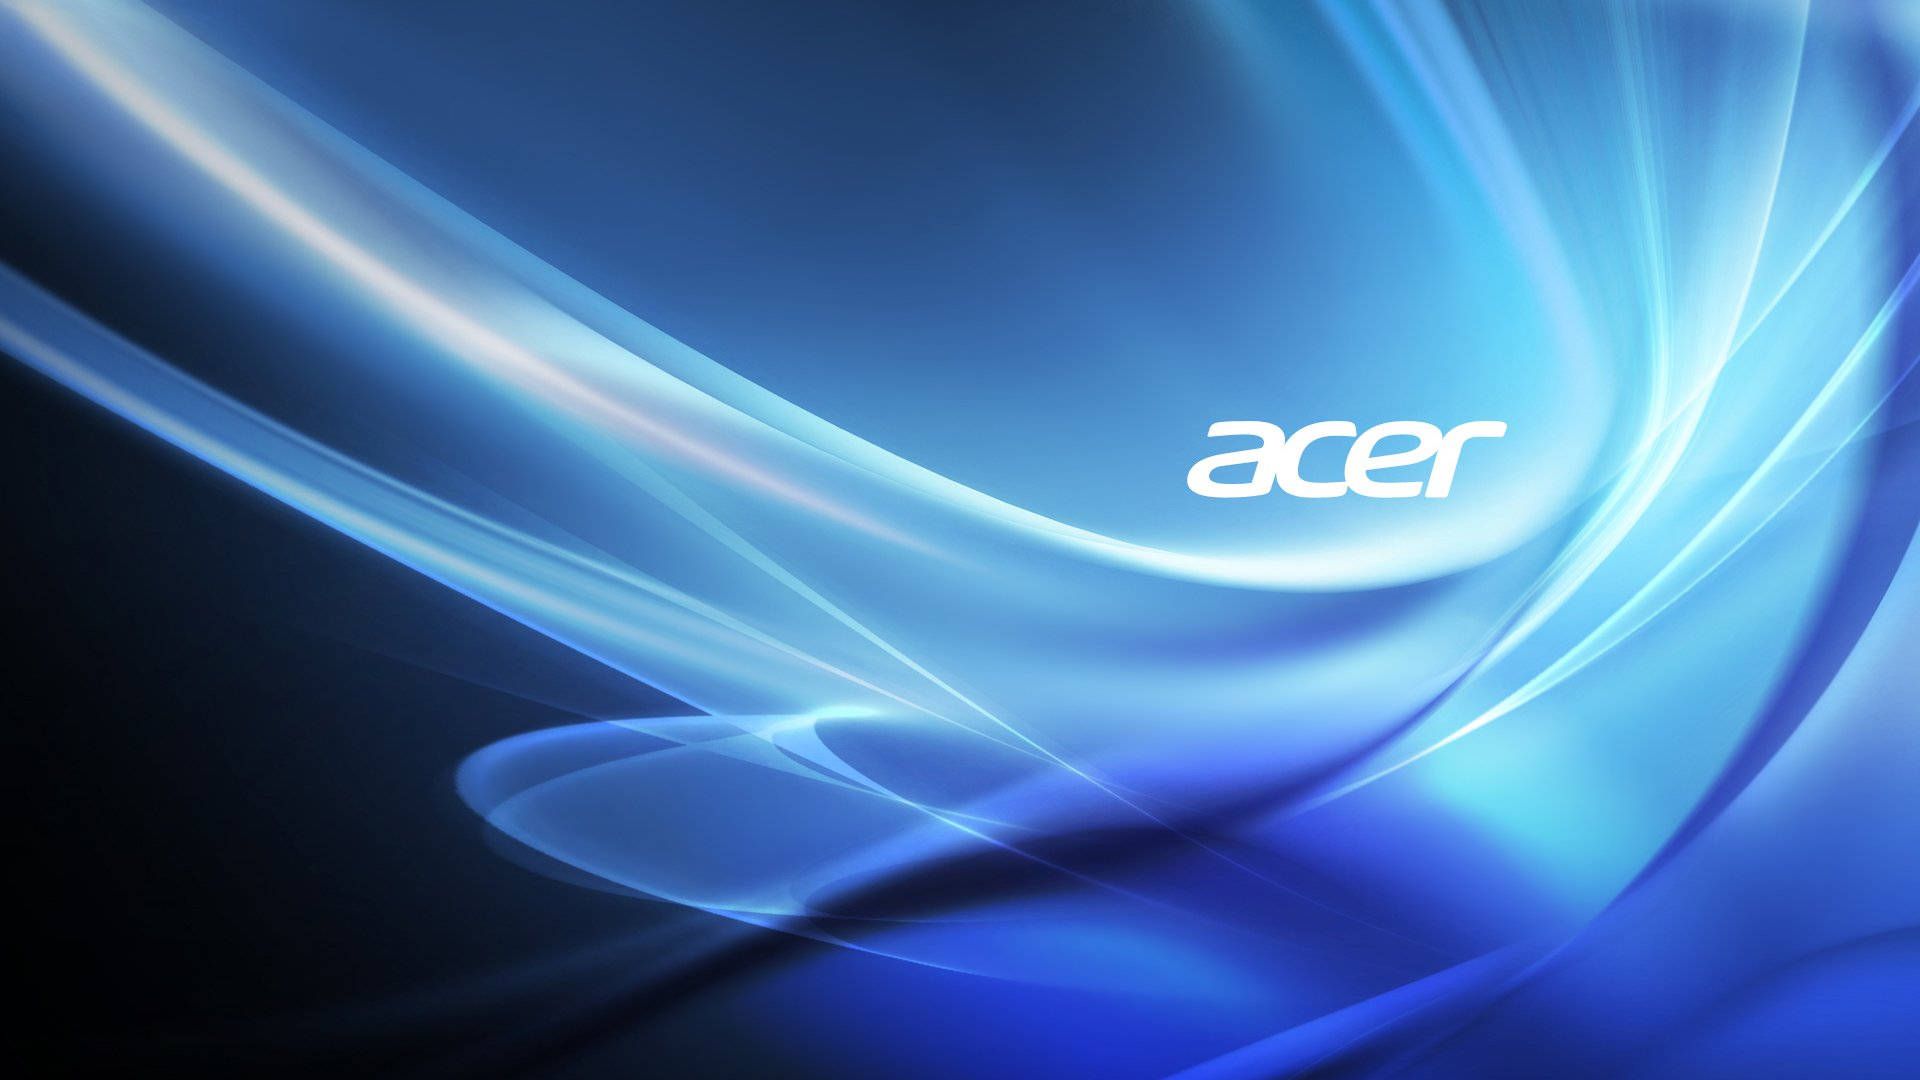  Acer Hintergrundbild 1920x1080. Download Acer Blue Aesthetic Themed Logo Wallpaper